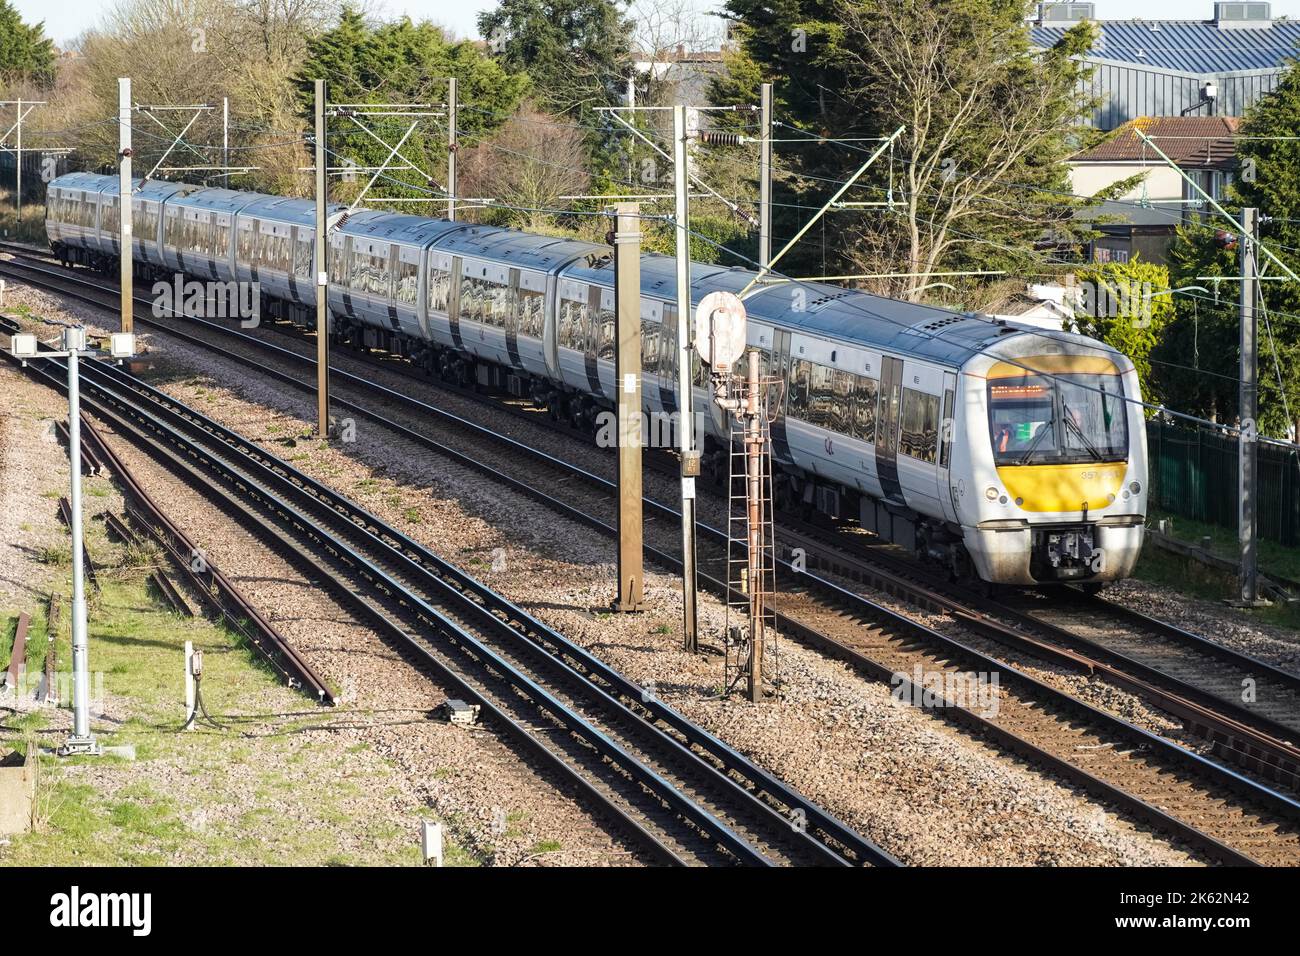 c2c train in Essex, England United Kingdom UK Stock Photo